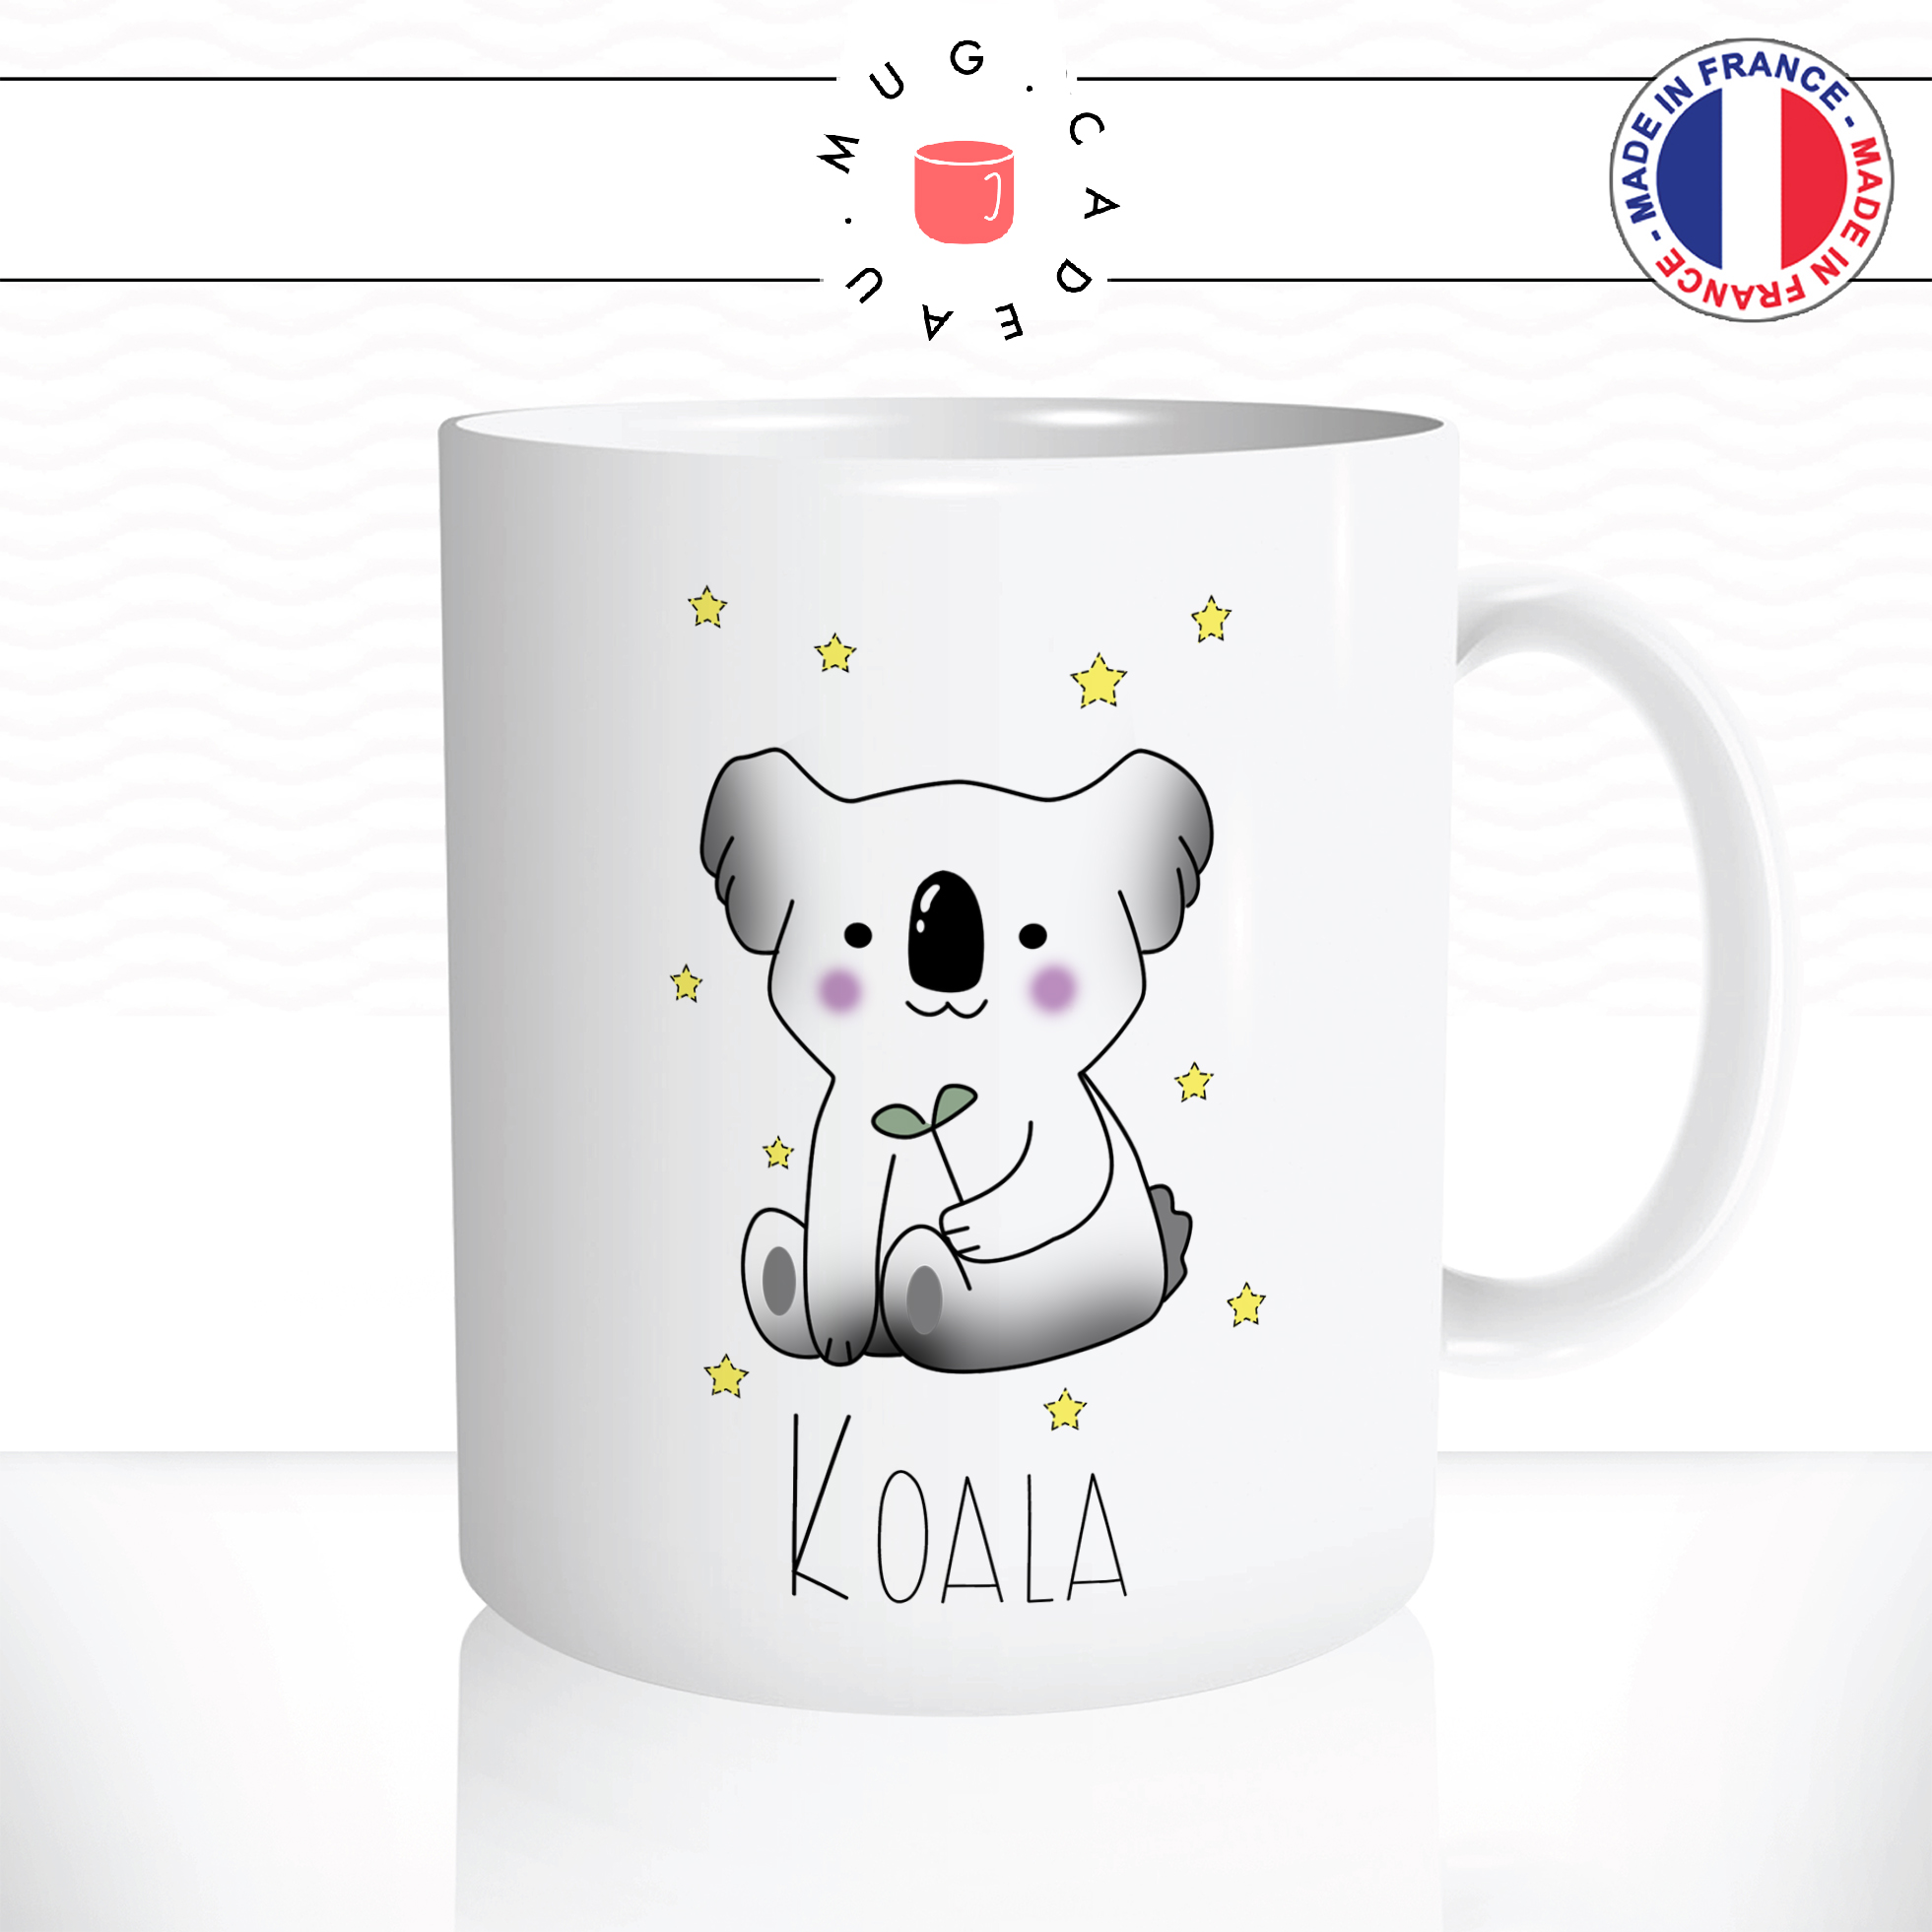 mug-tasse-ref6-koala-blanc-gris-mignon-etoiles-ecriture-cafe-the-mugs-tasses-personnalise-anse-droite